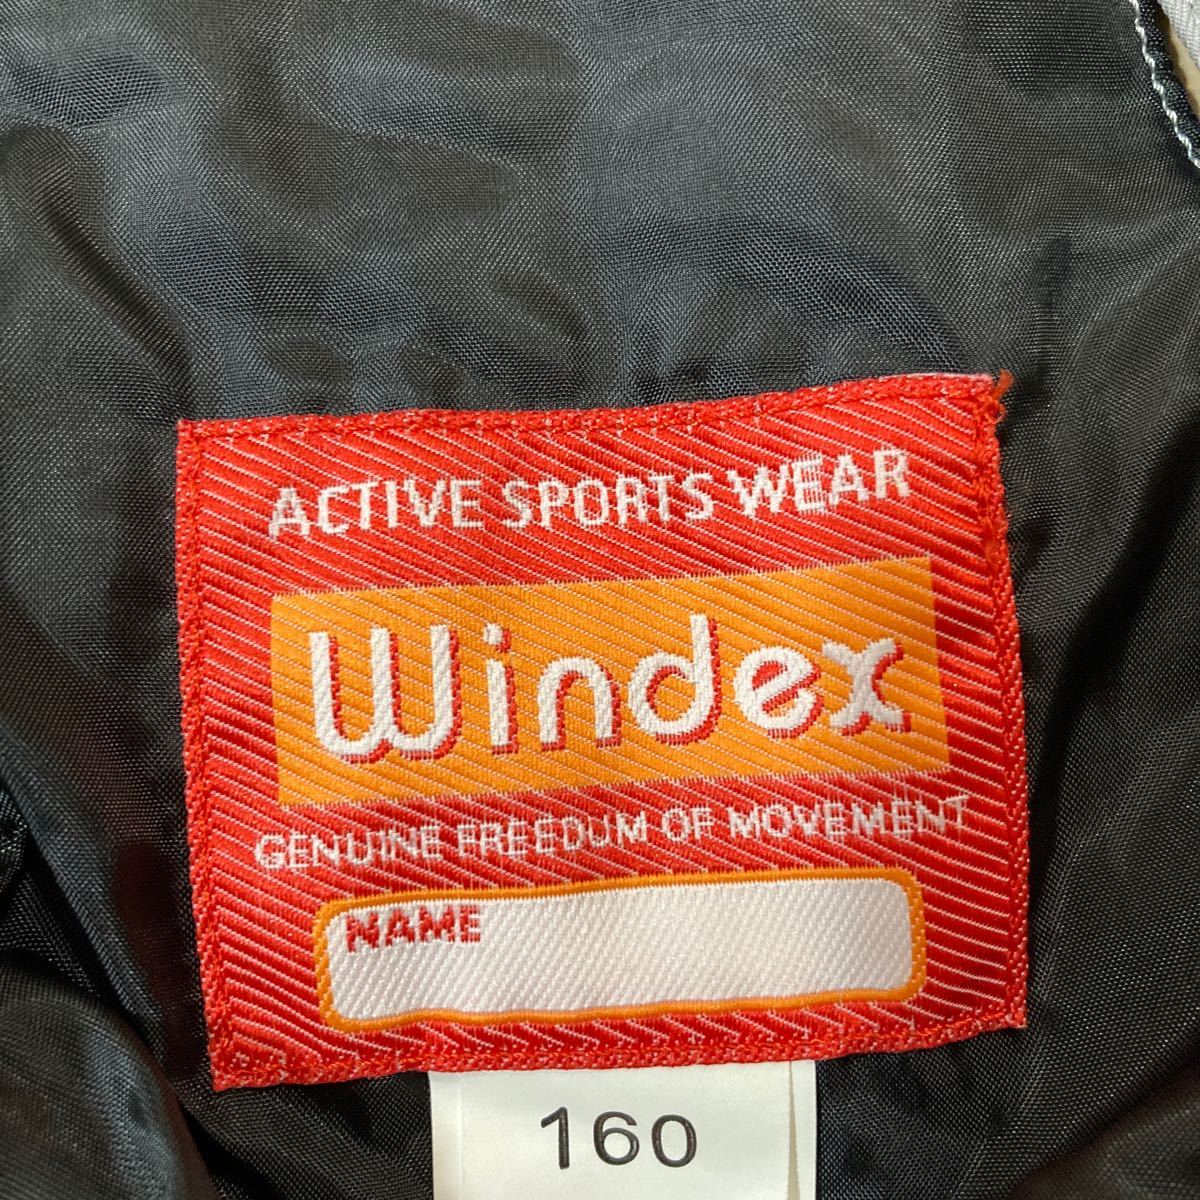 Windex ウィンデックス スキーウェア スノーボードウェア 上下セット セットアップ サイズ160 子供用 キッズ_画像9